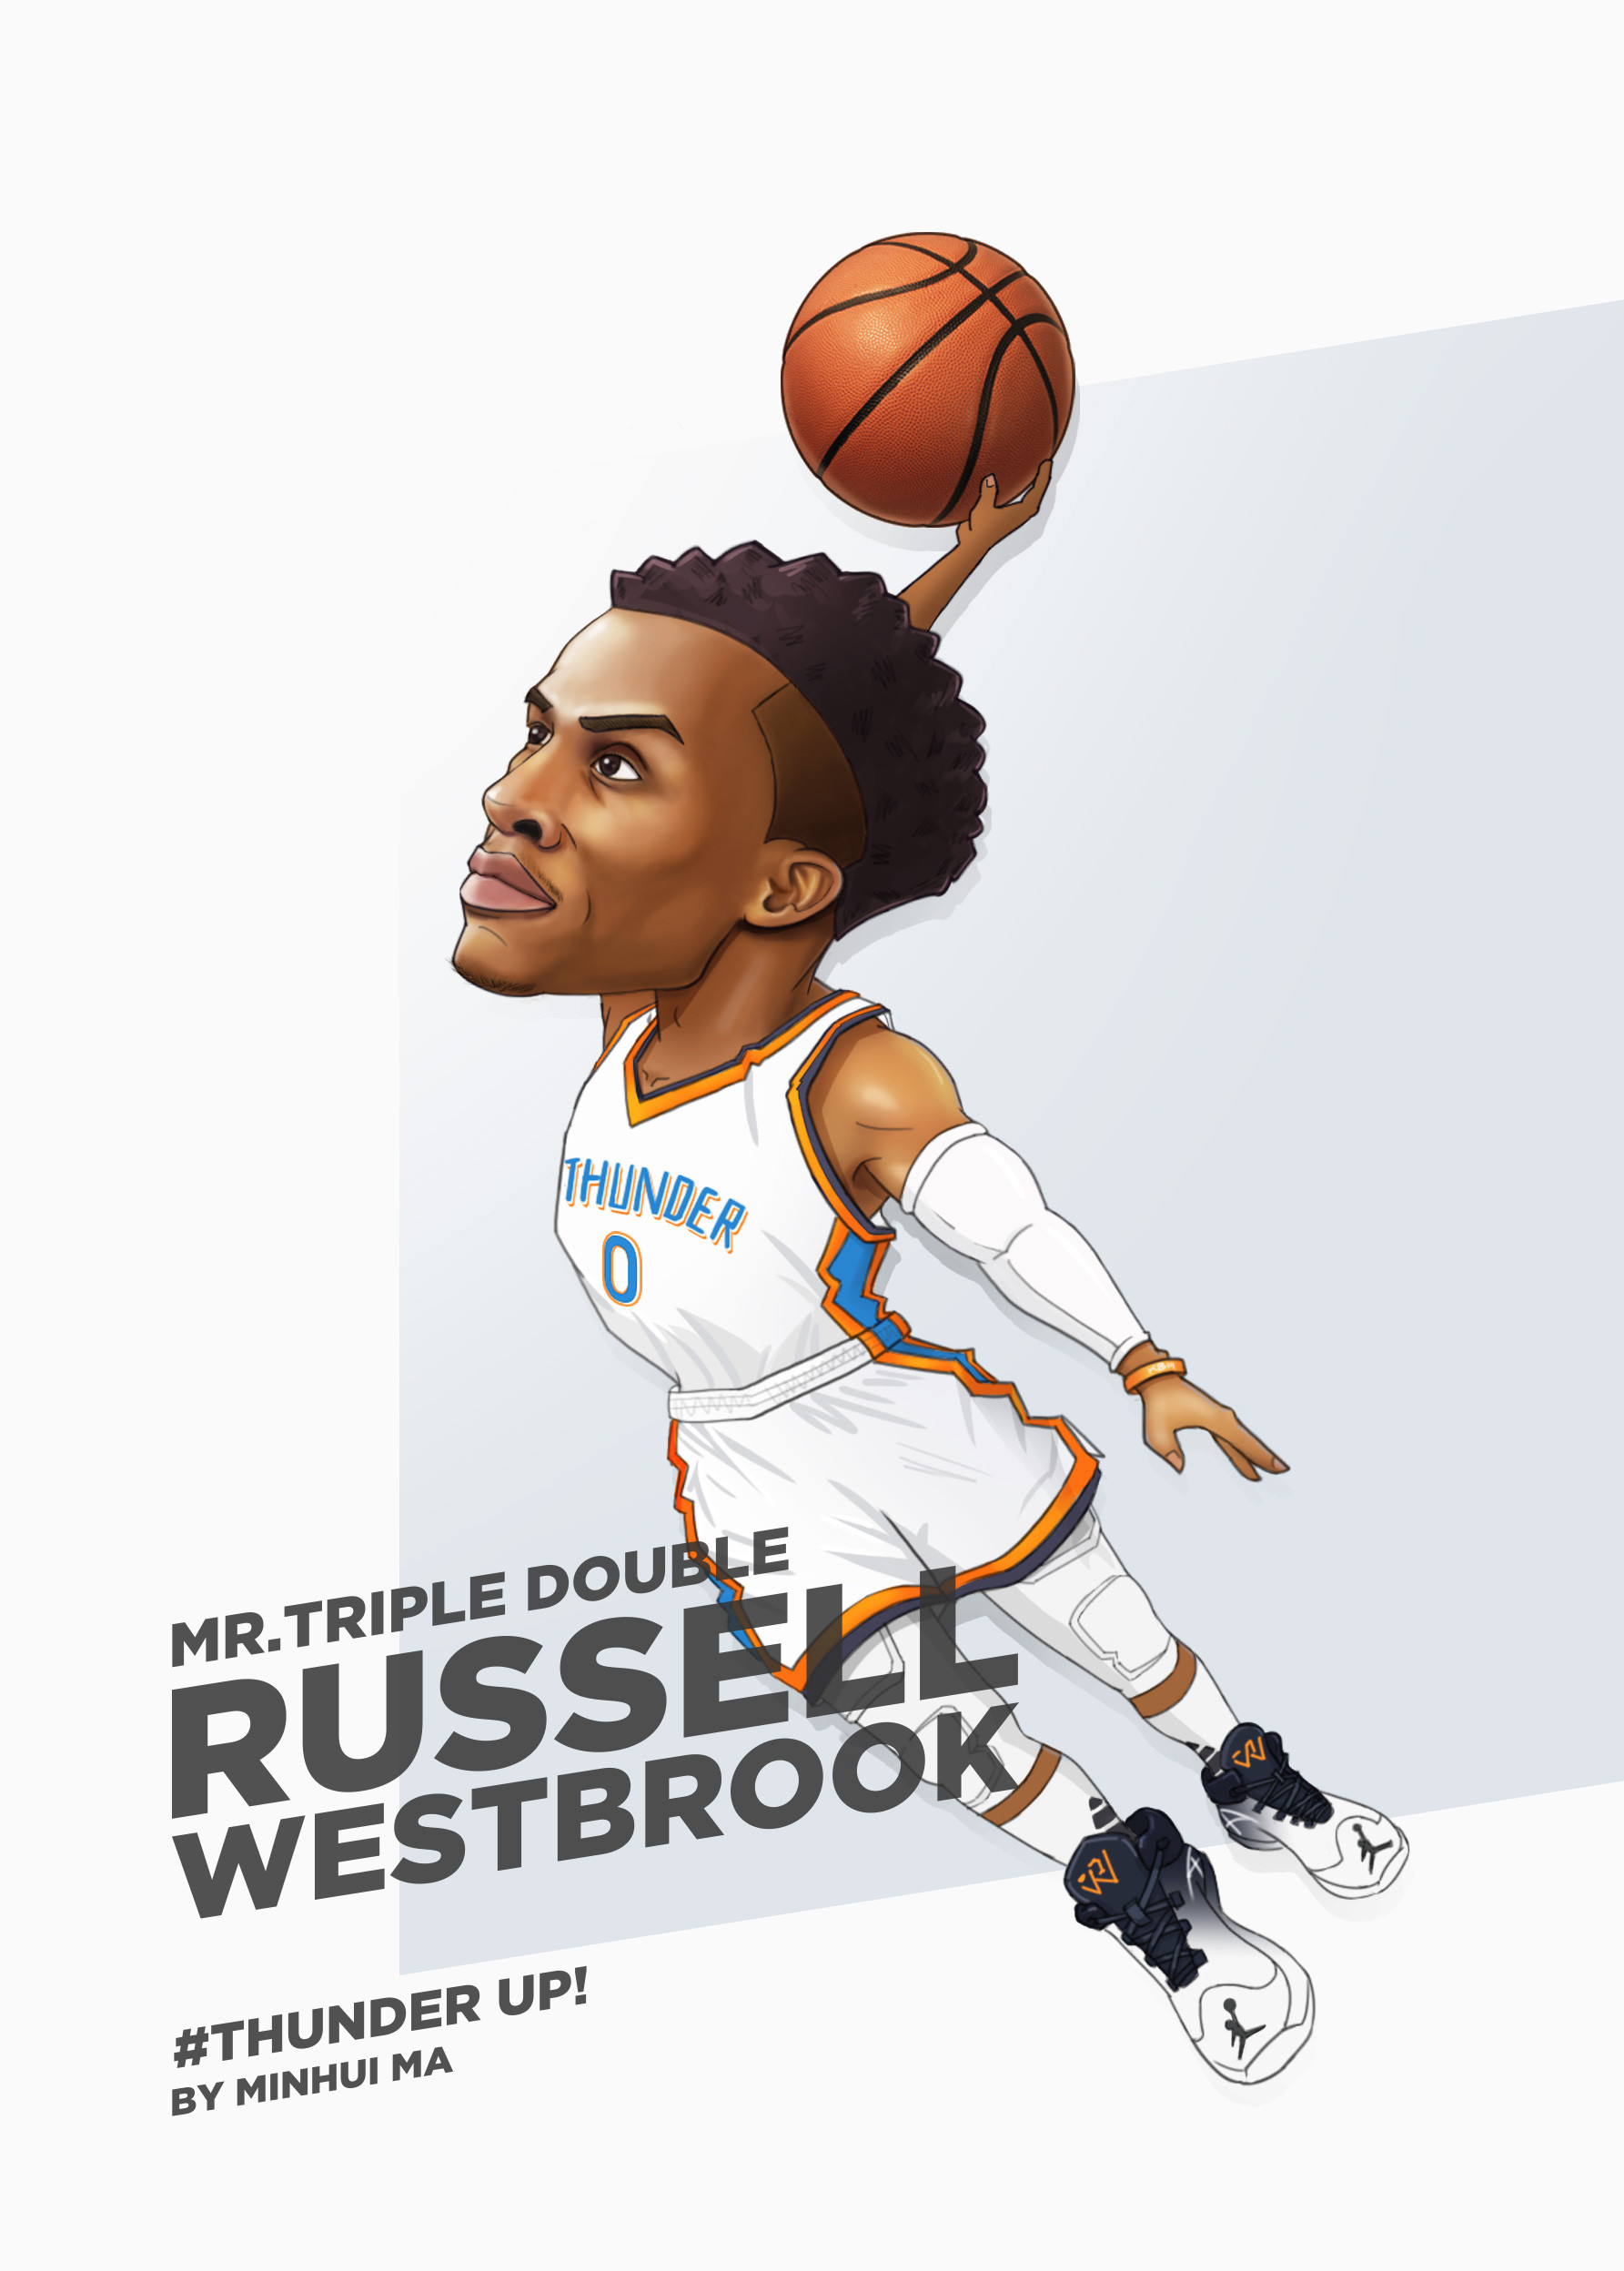 fond d'écran russell westbrook,joueur de basketball,basketball,mouvements de basket ball,basketball,dessin animé